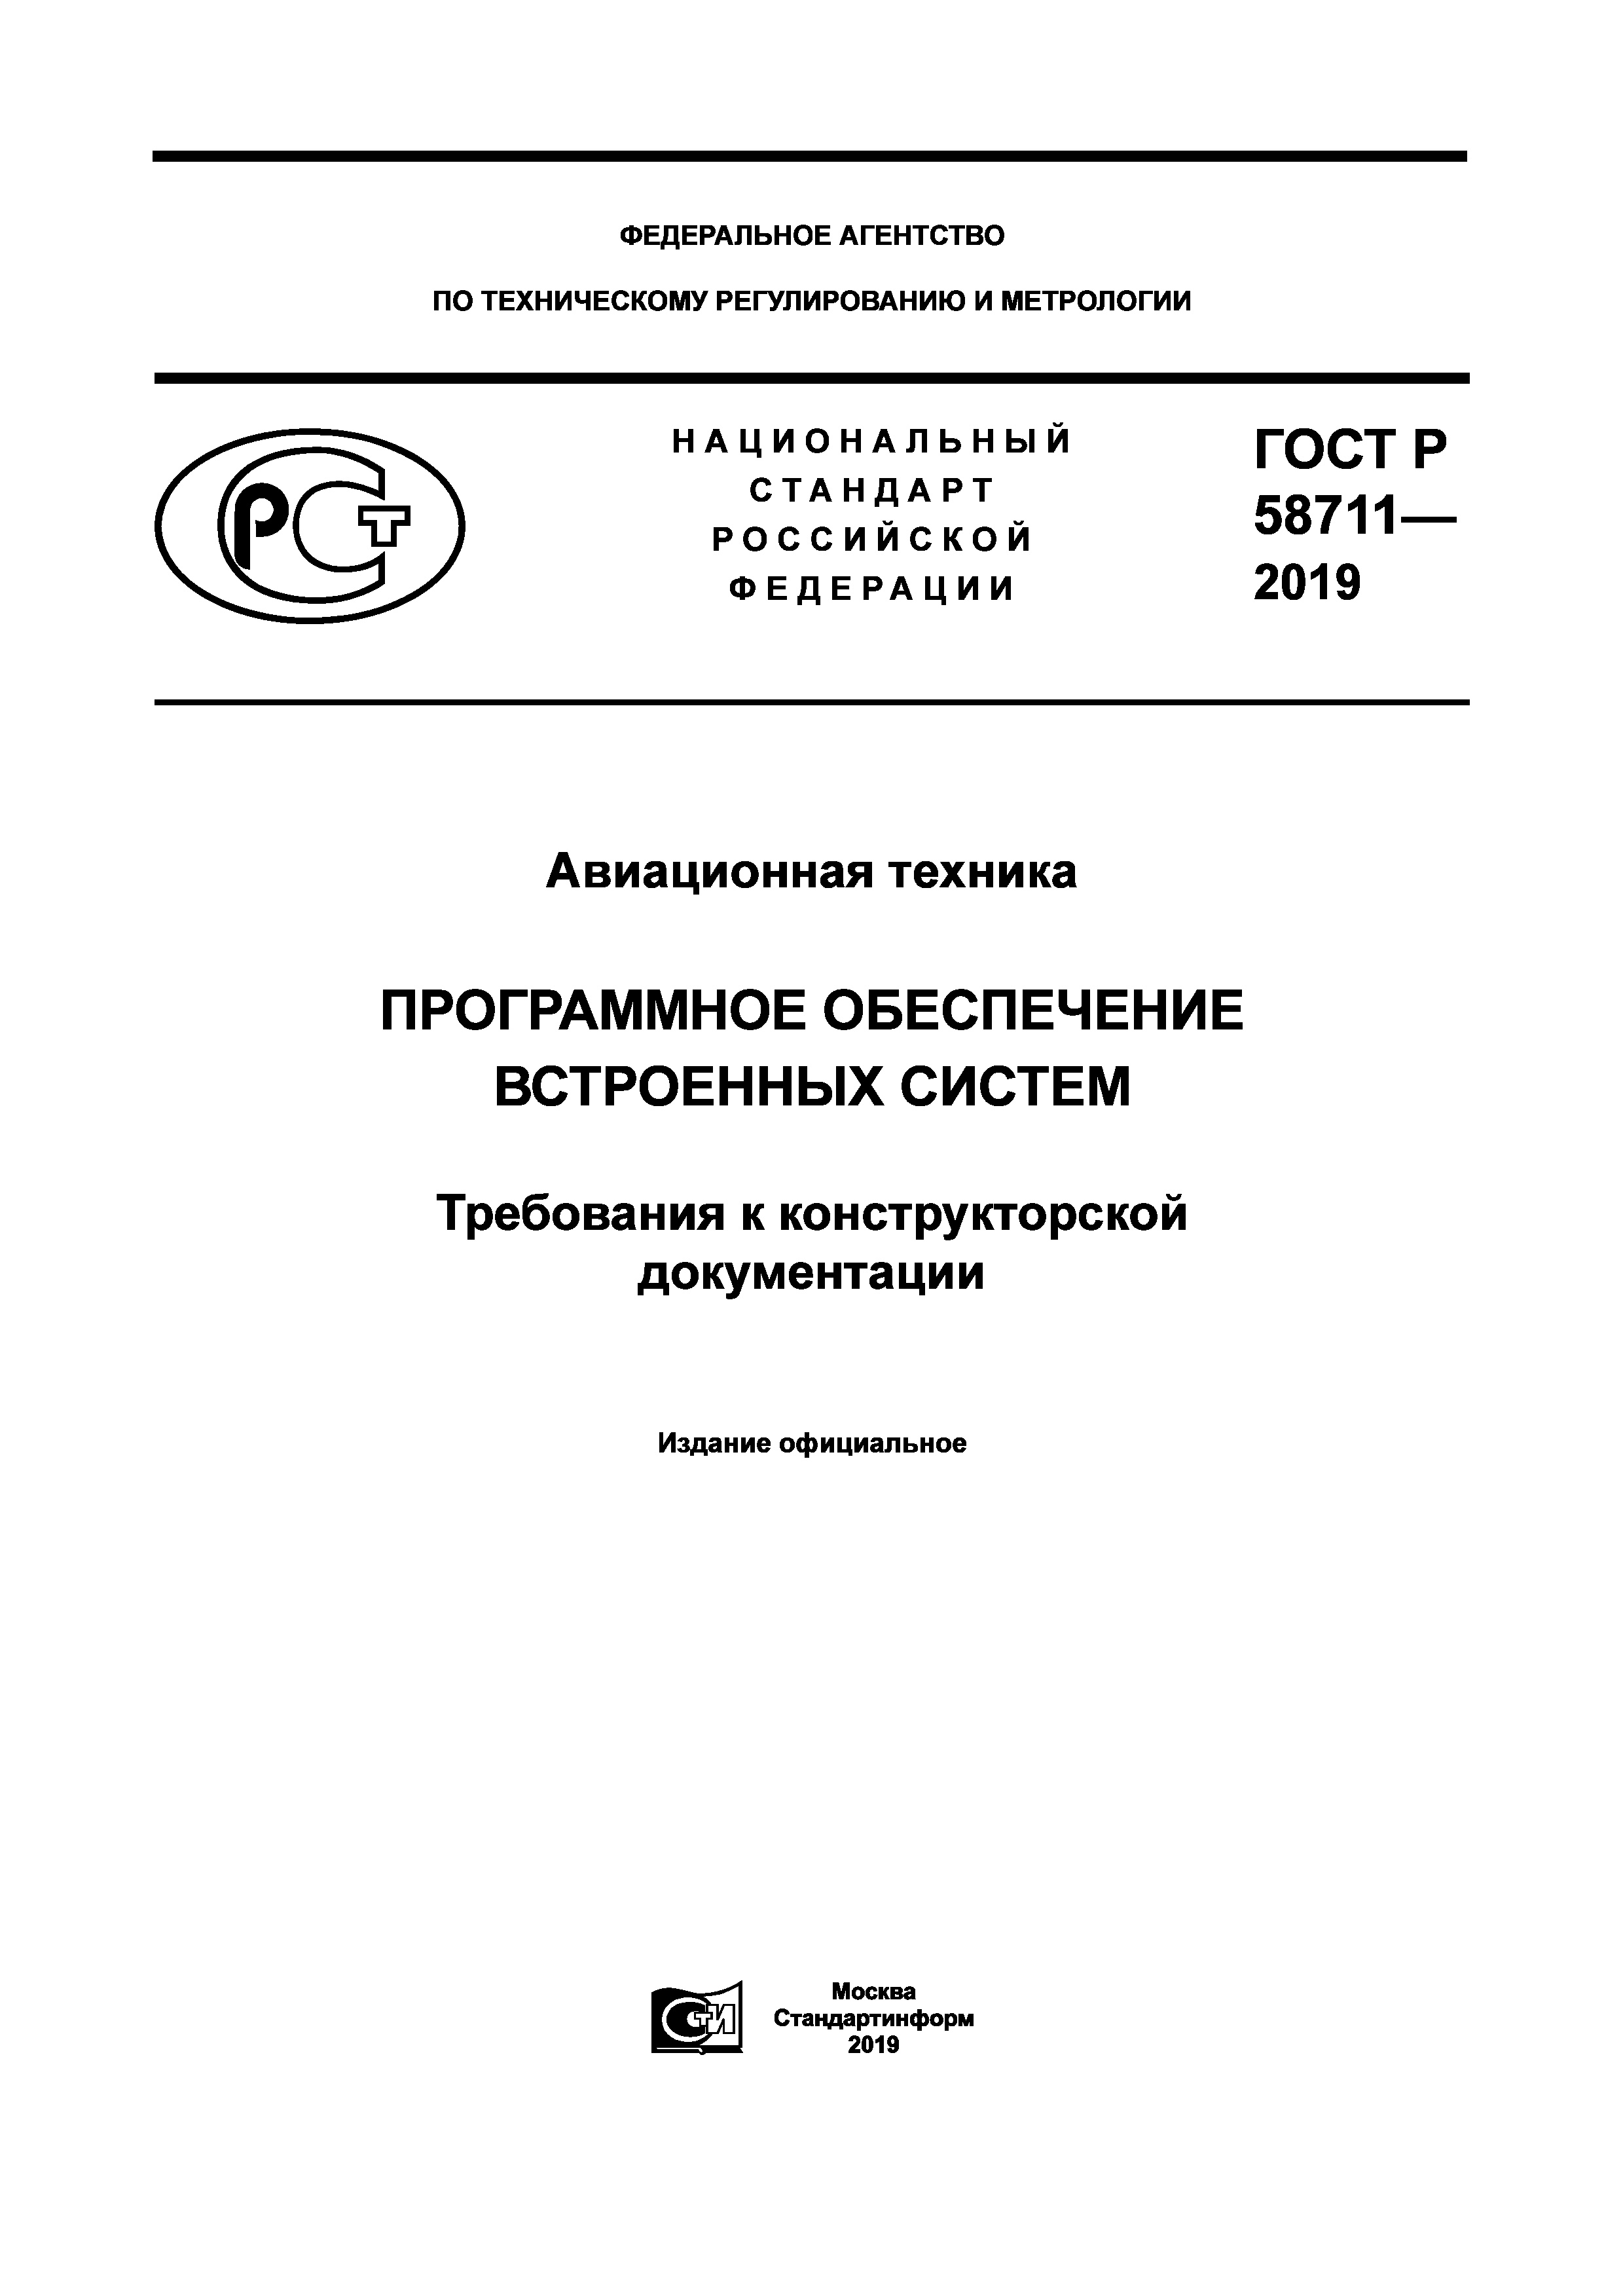 ГОСТ Р 58711-2019